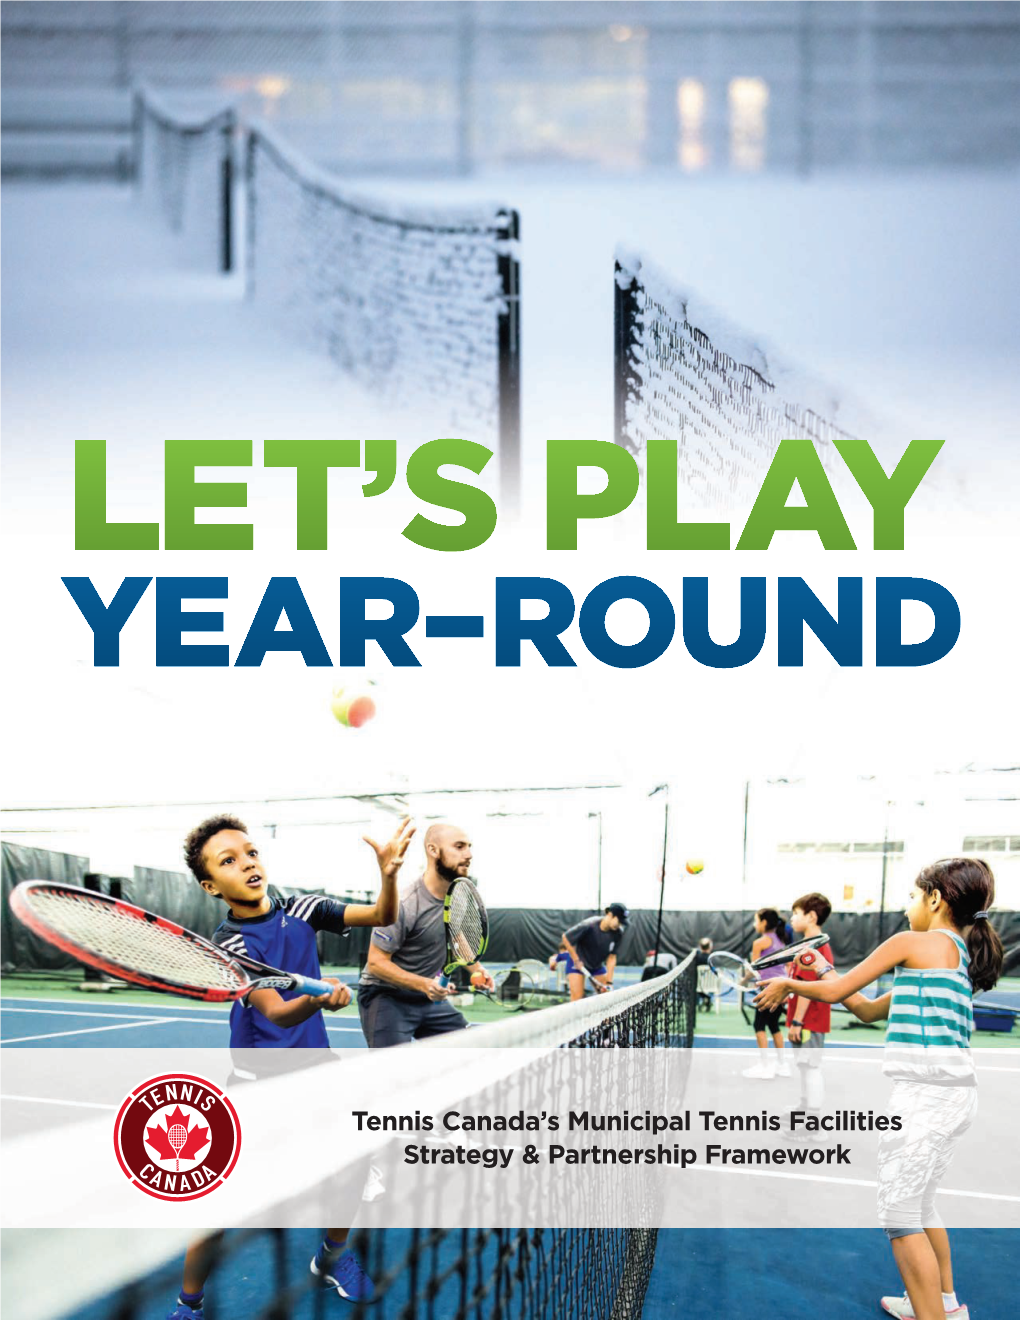 Tennis Canada's Municipal Tennis Facilities Strategy & Partnership